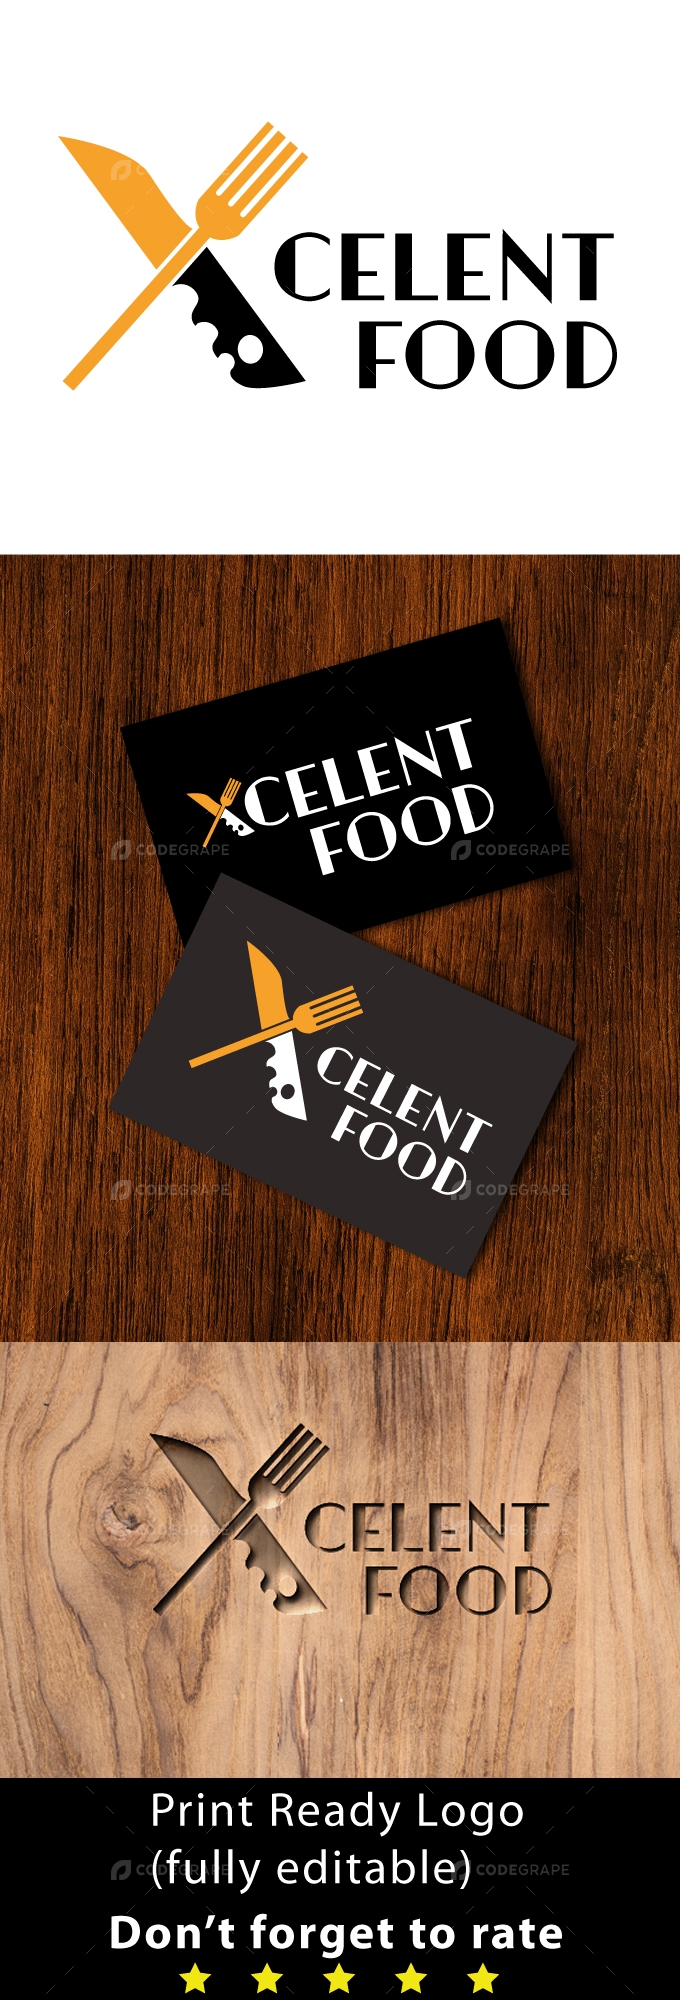 Xcelent Food Logo